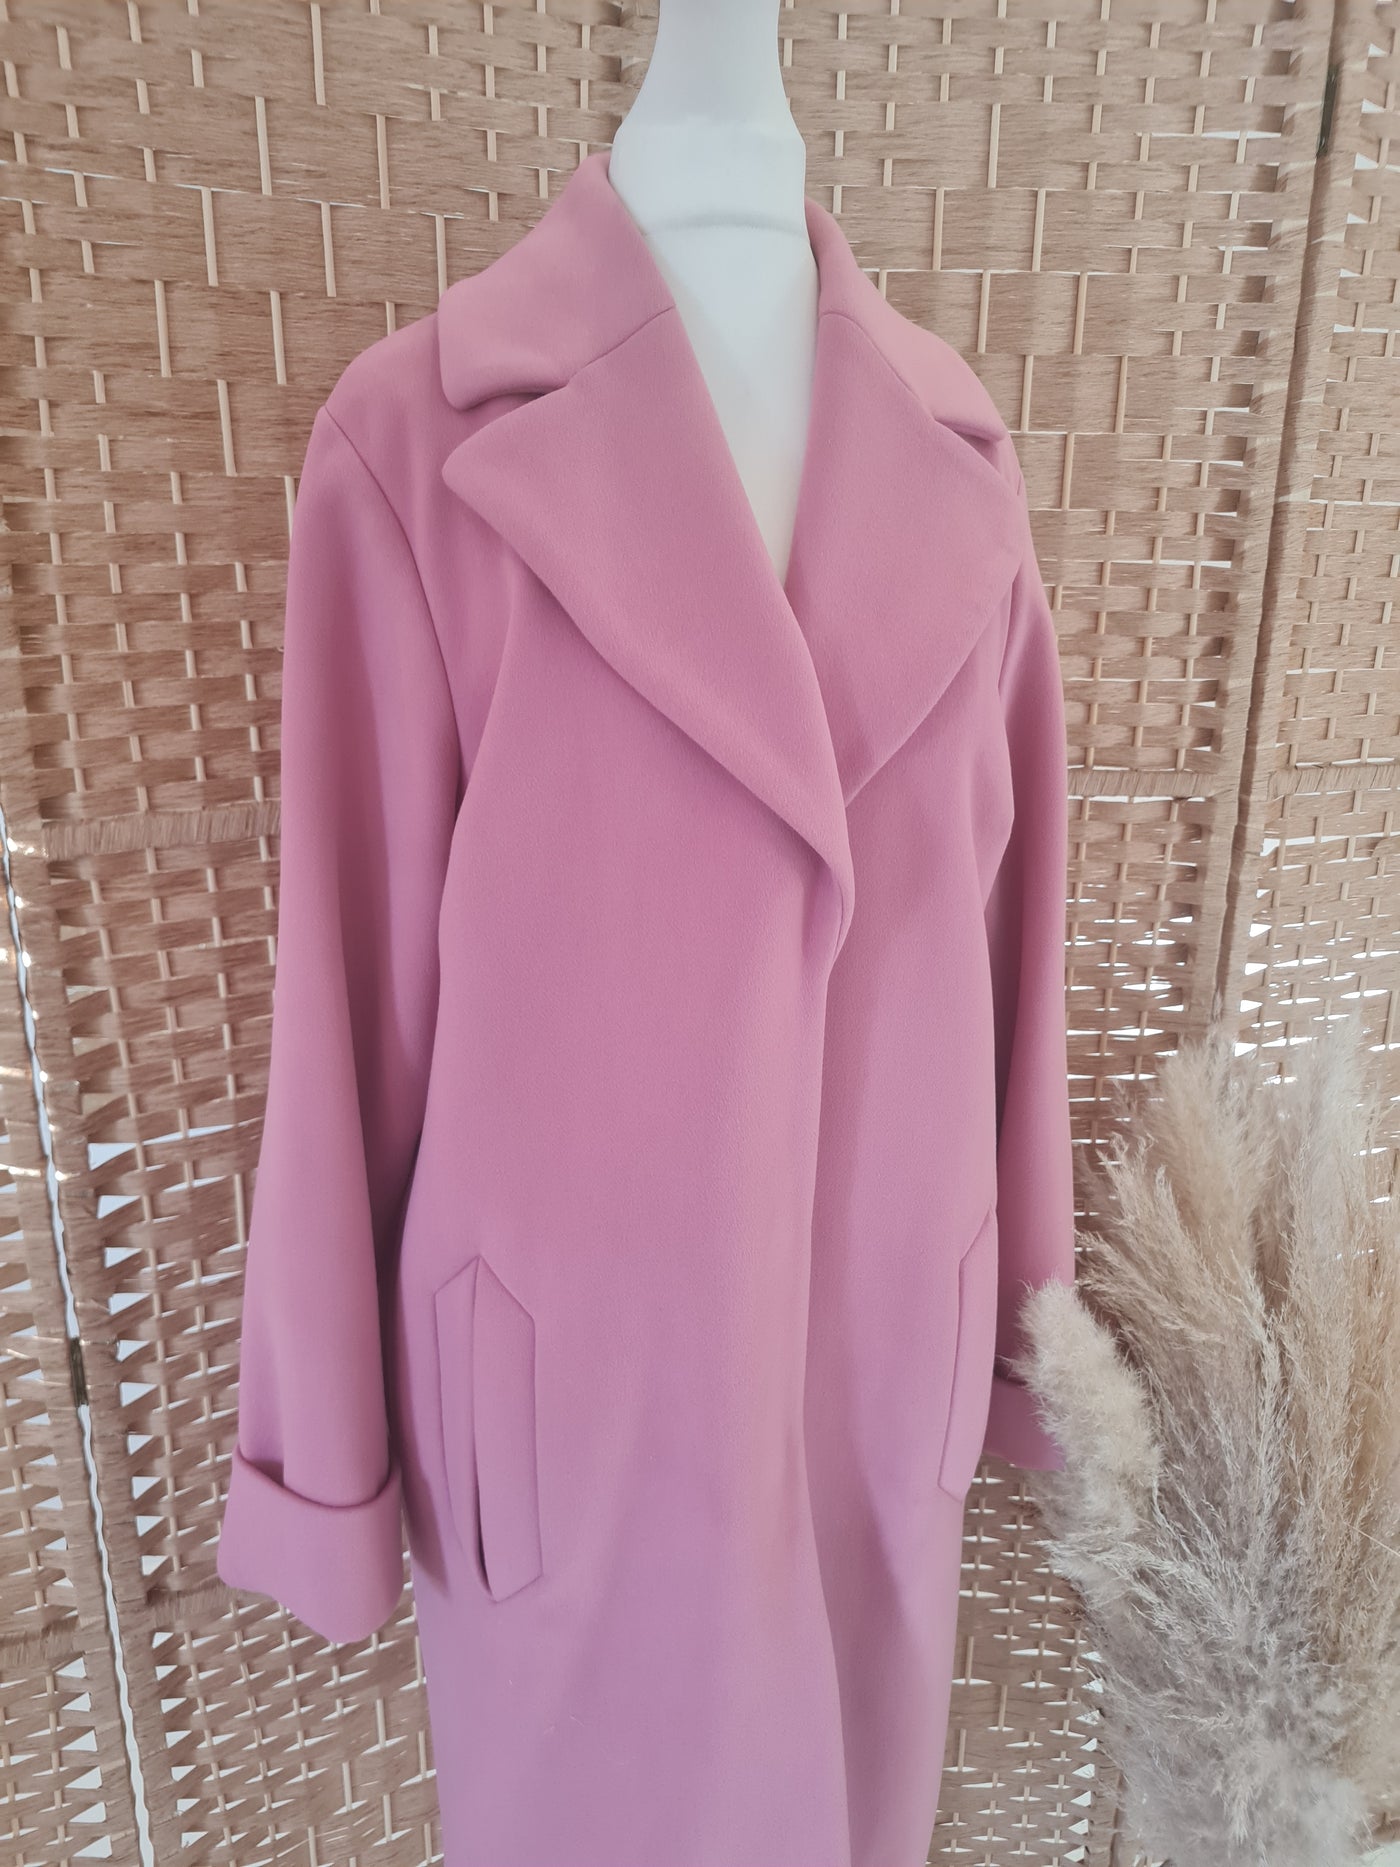 M&S pink coat 8